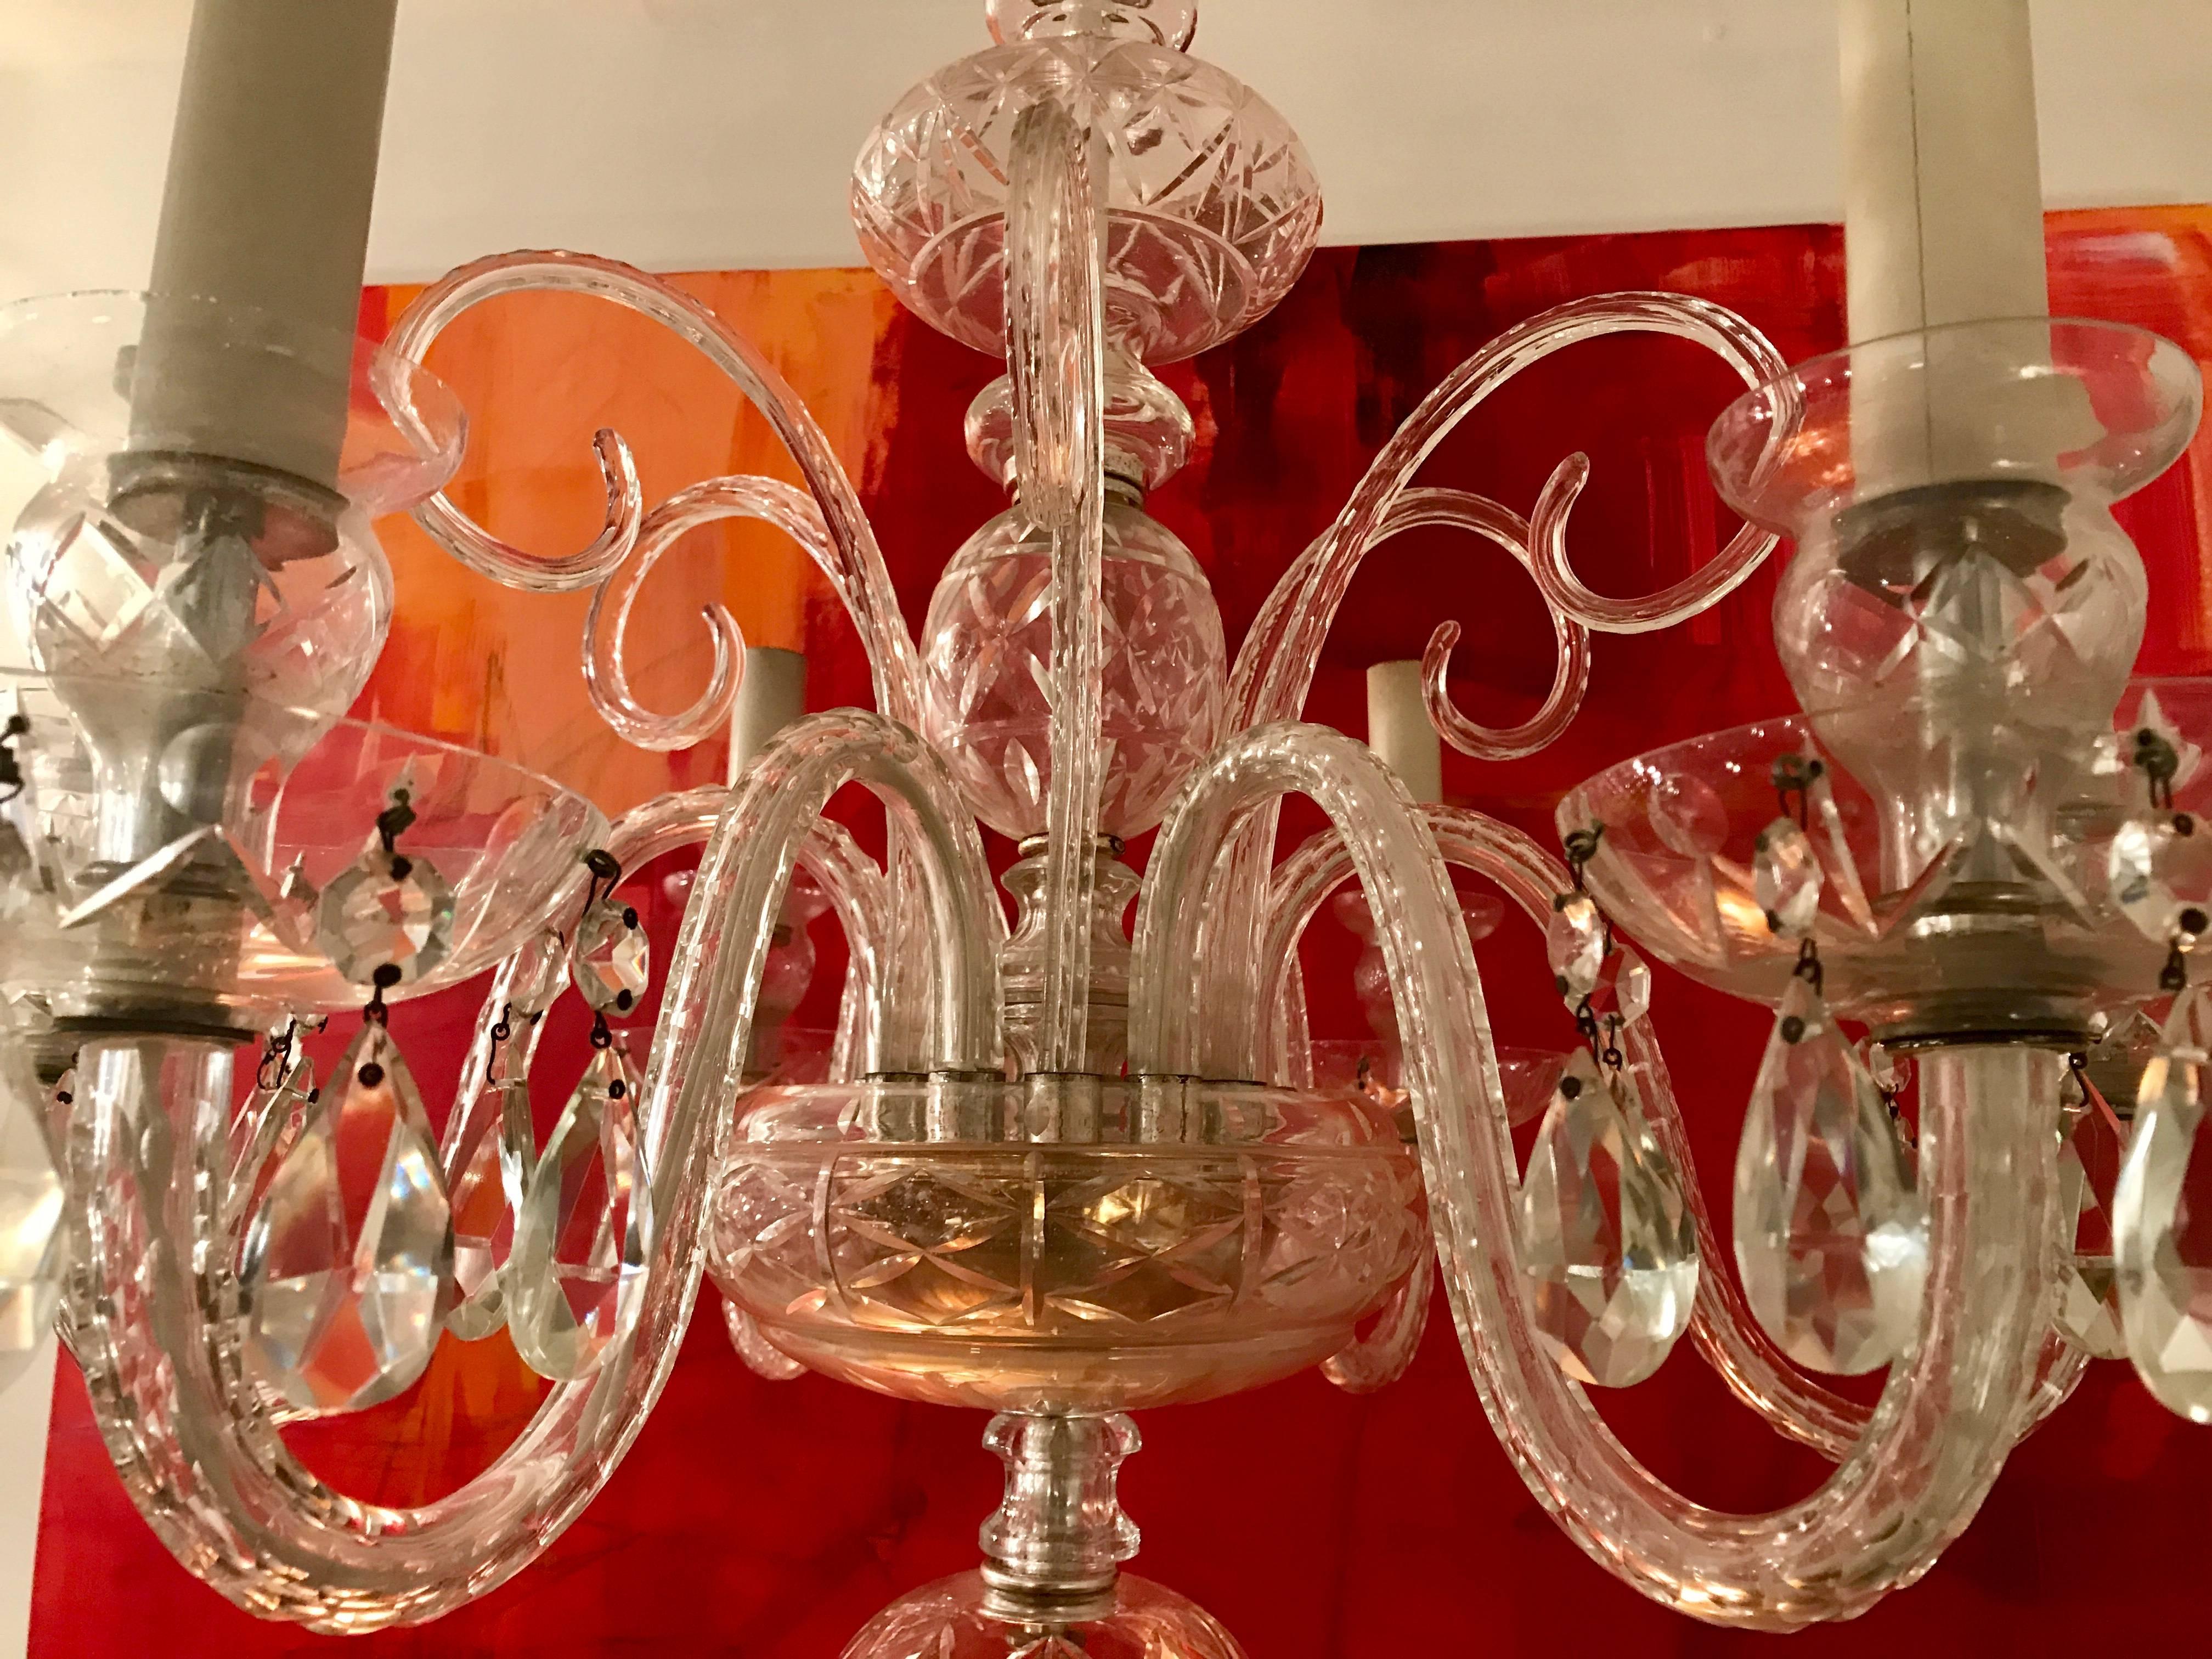 Beautiful six-light Venetian glass chandelier, handblown decorative stems, early 20th century, Italy.